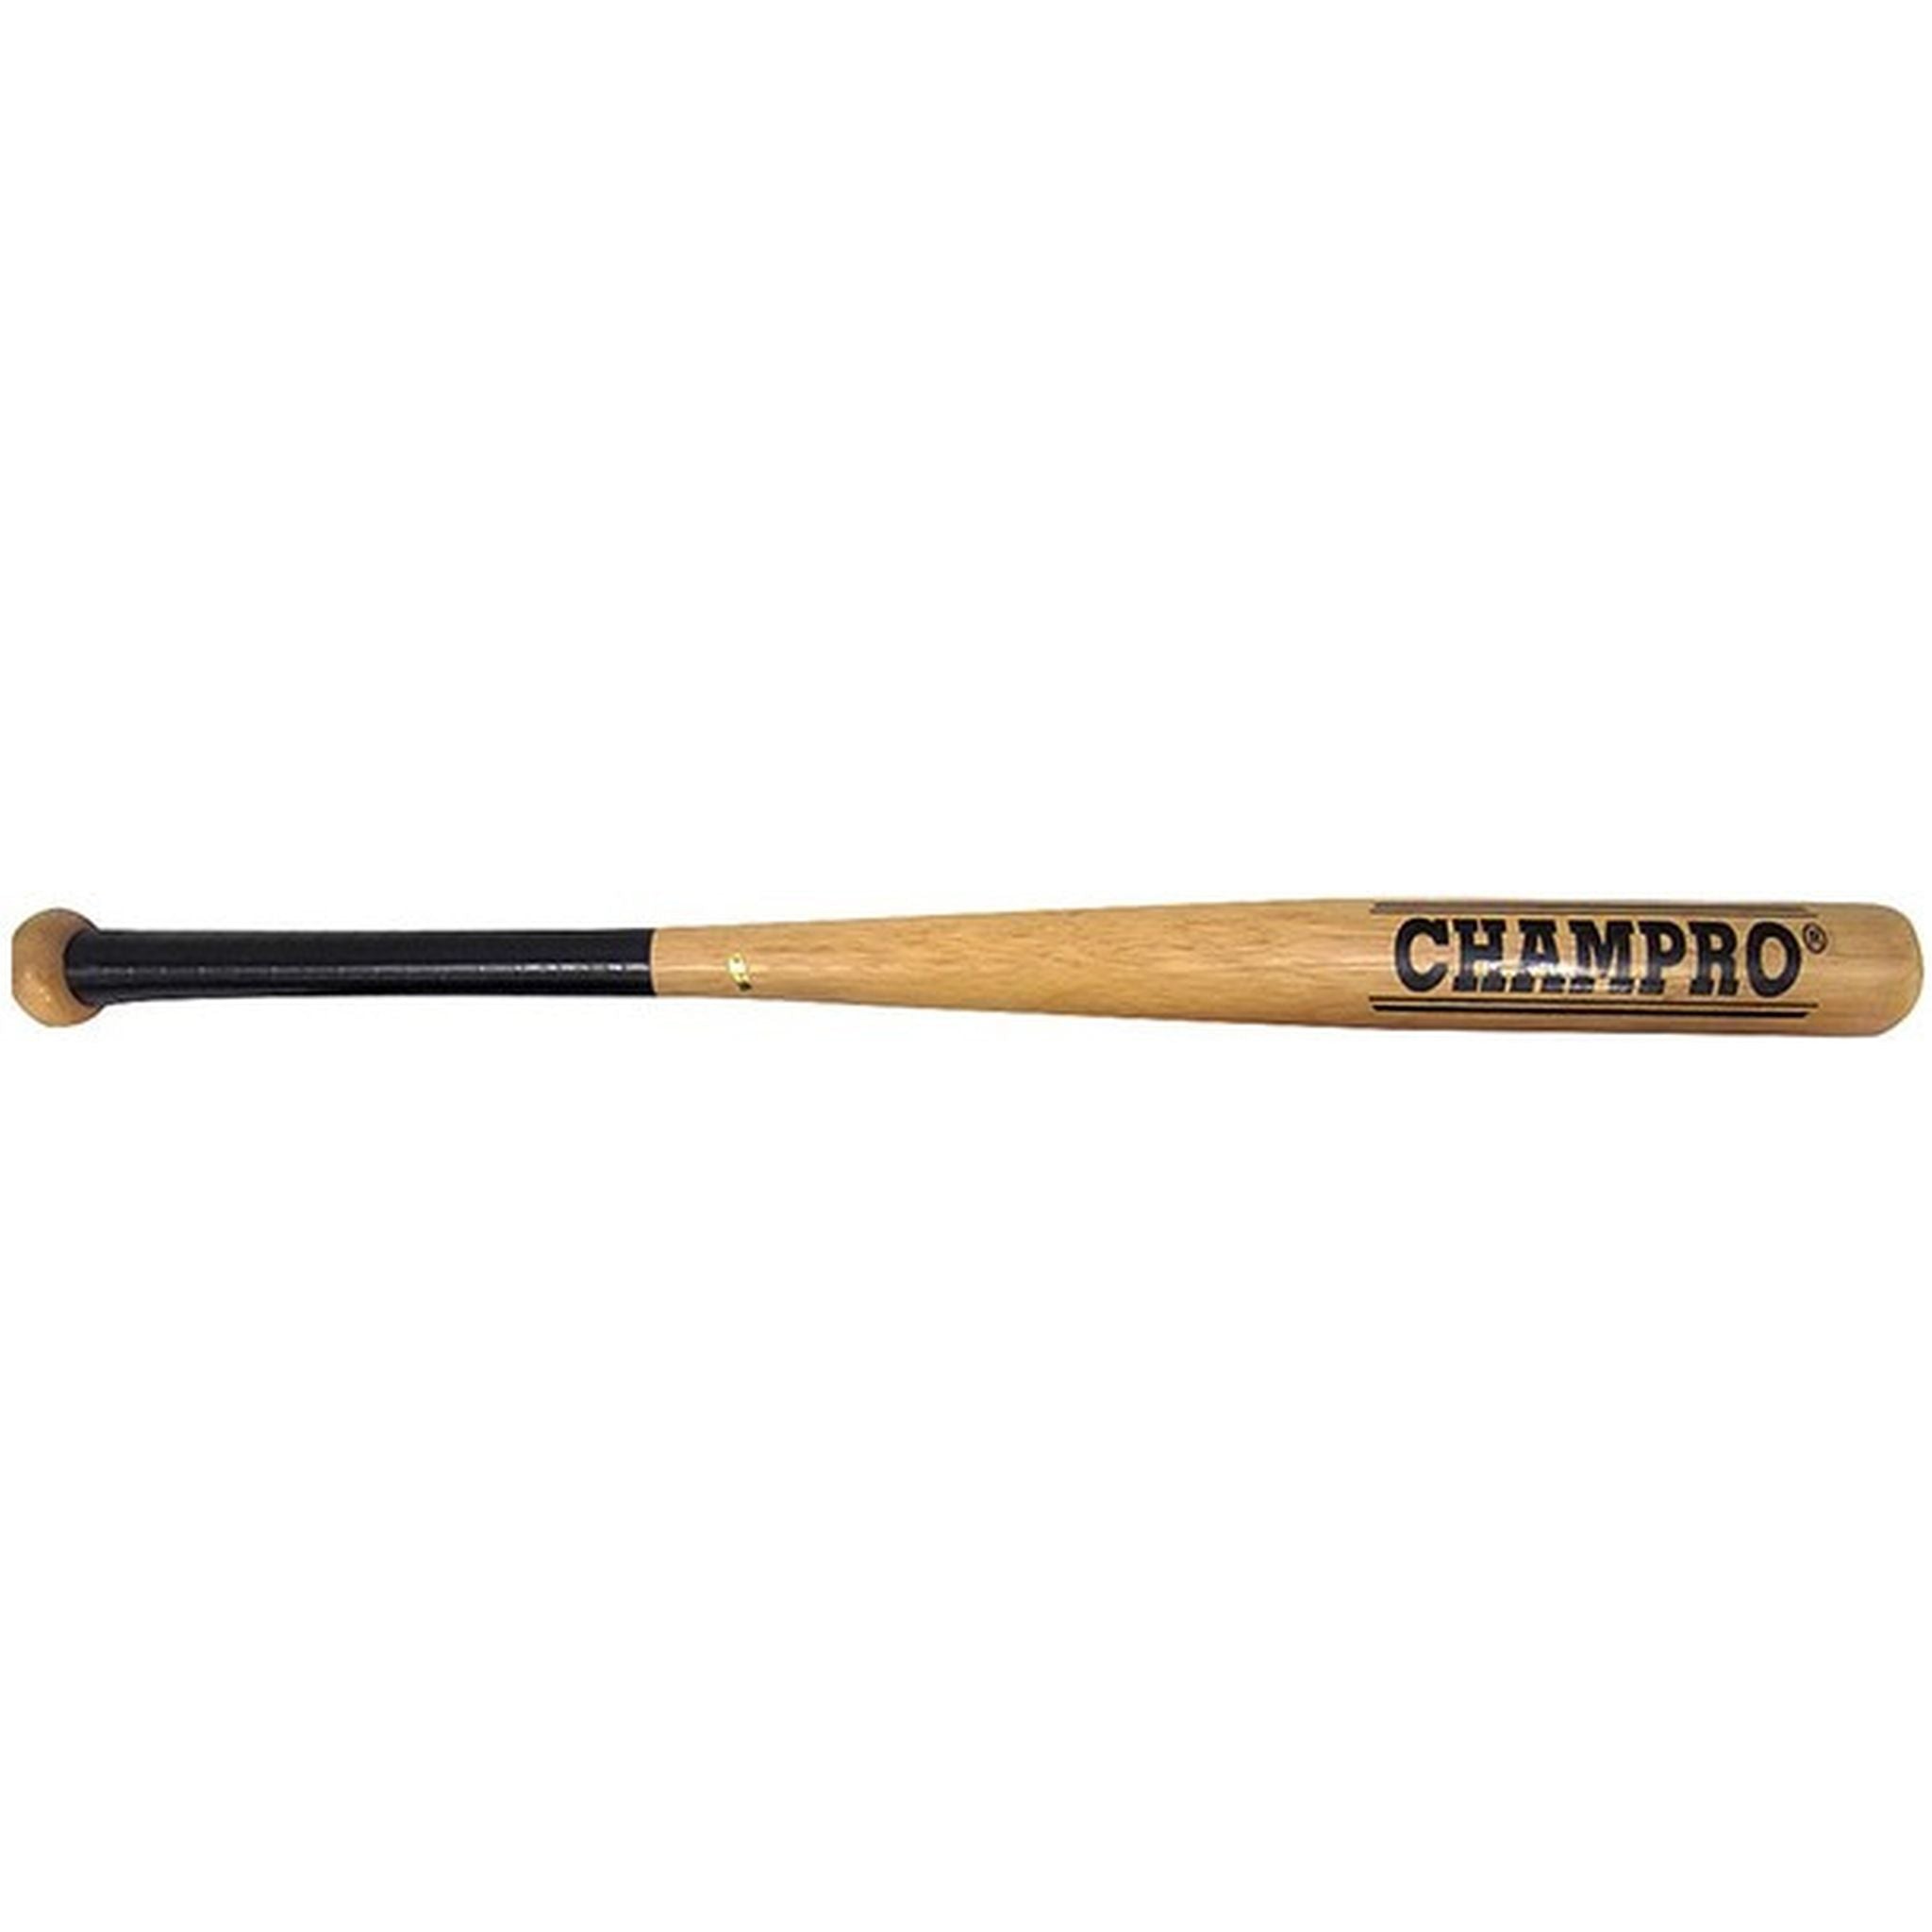 Champro Wood 26-inch Teeball Bat